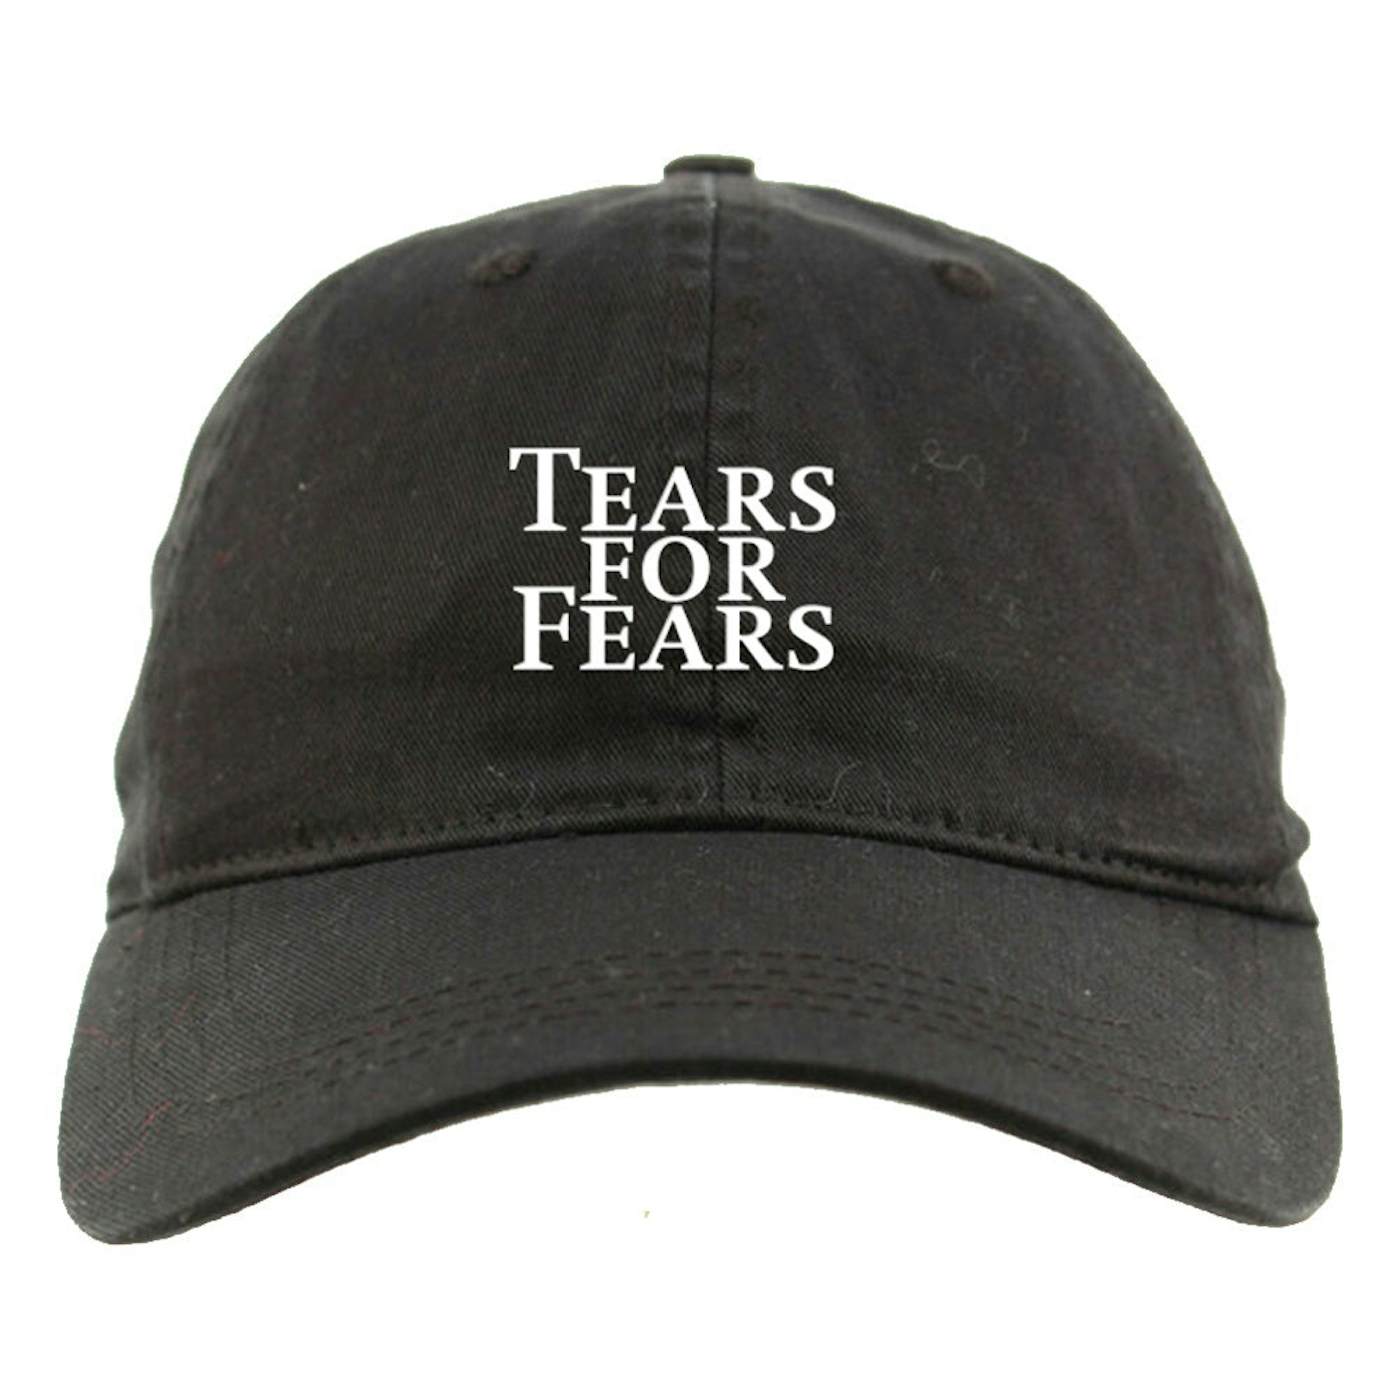 TEARS FOR FEARS LOGO BLACK DAD CAP